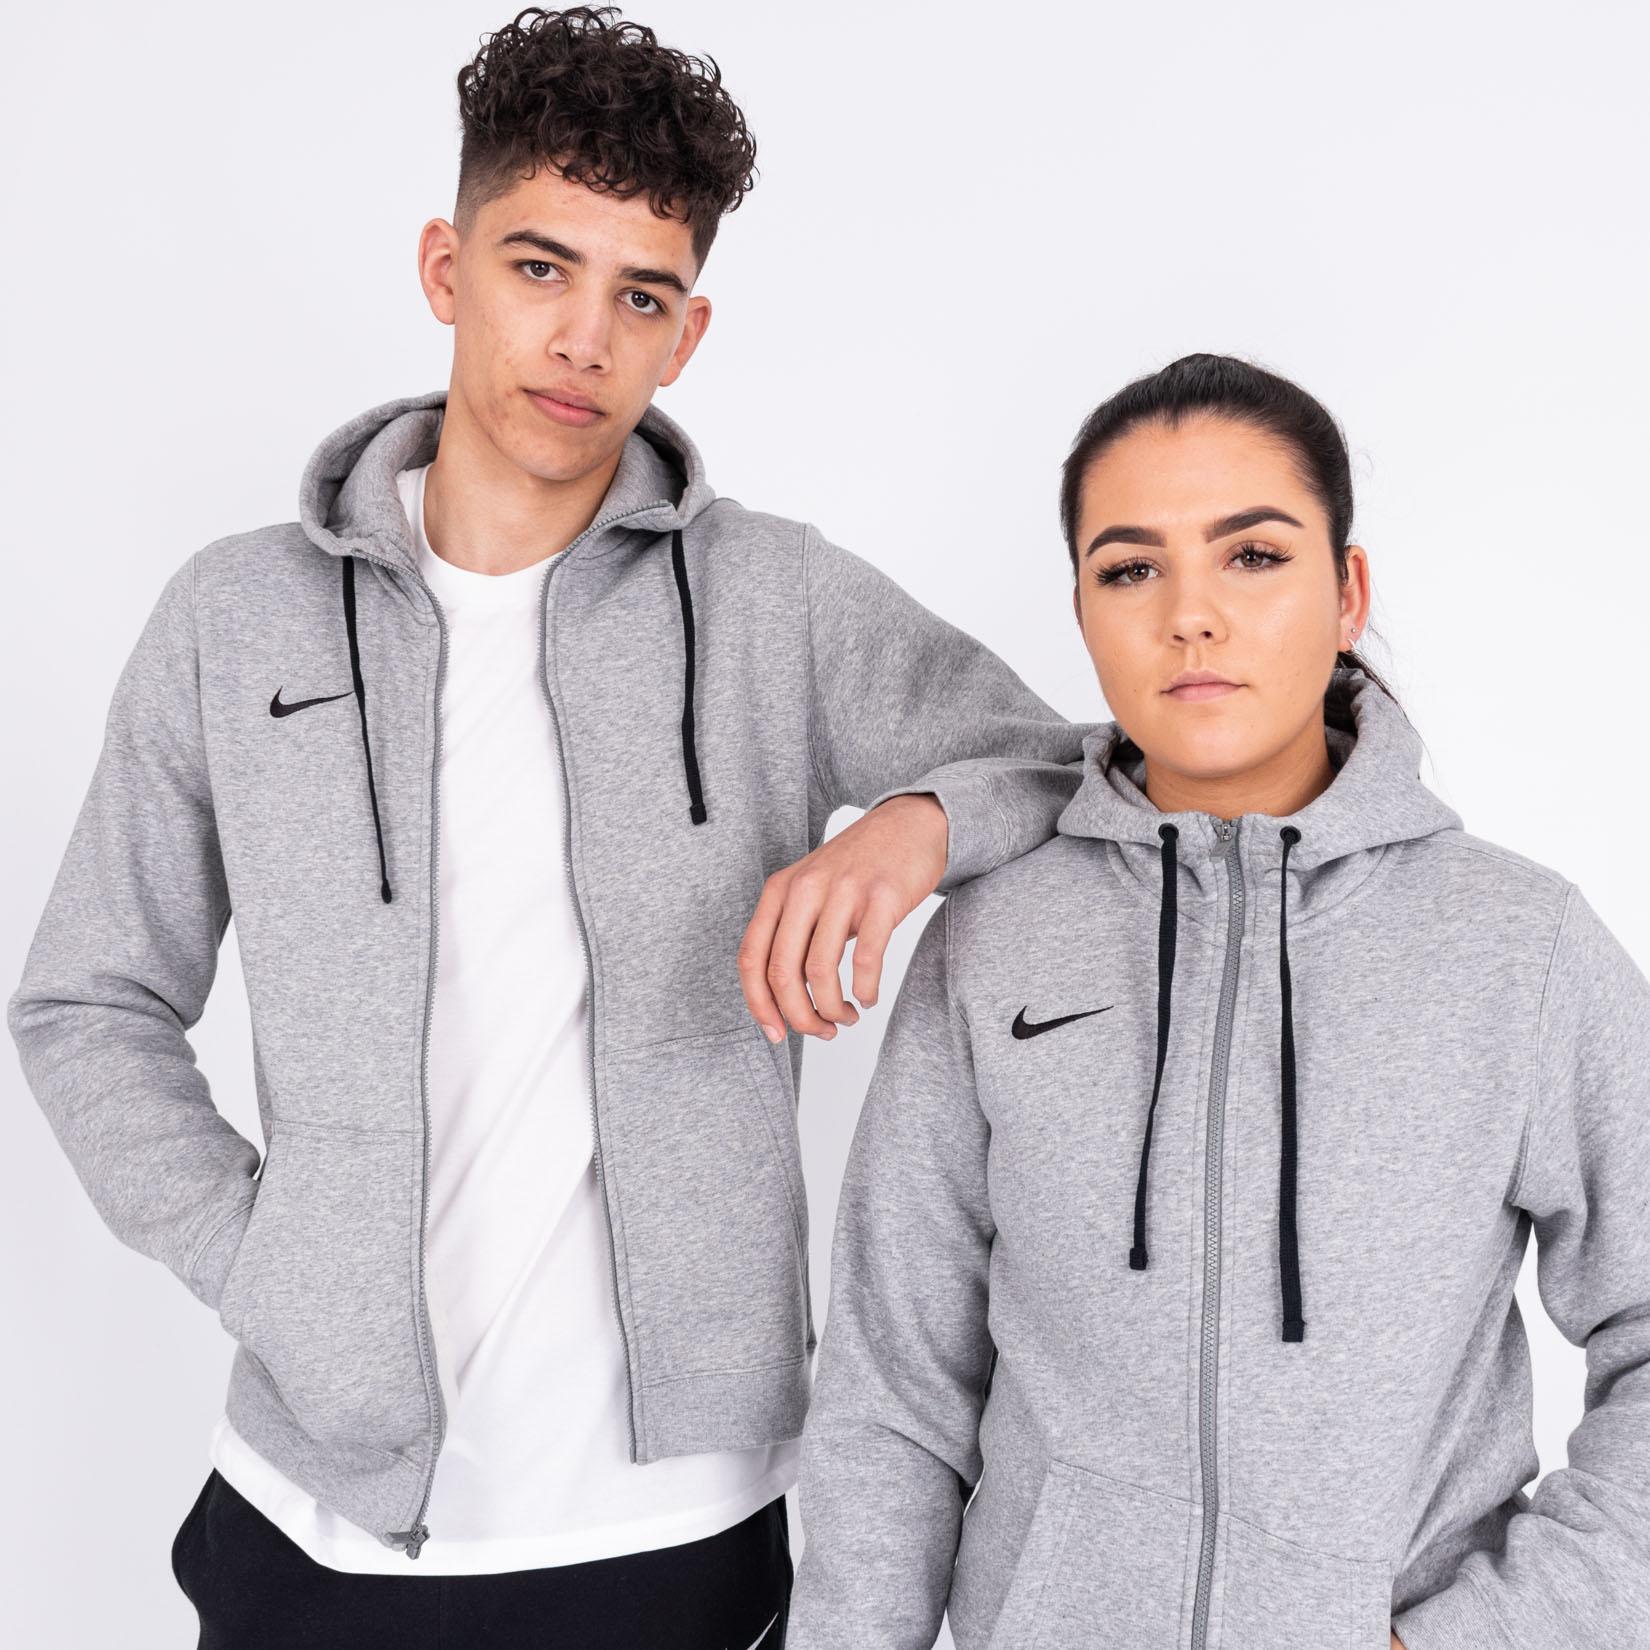 You x Nike Loungewear: The Perfect Partnership